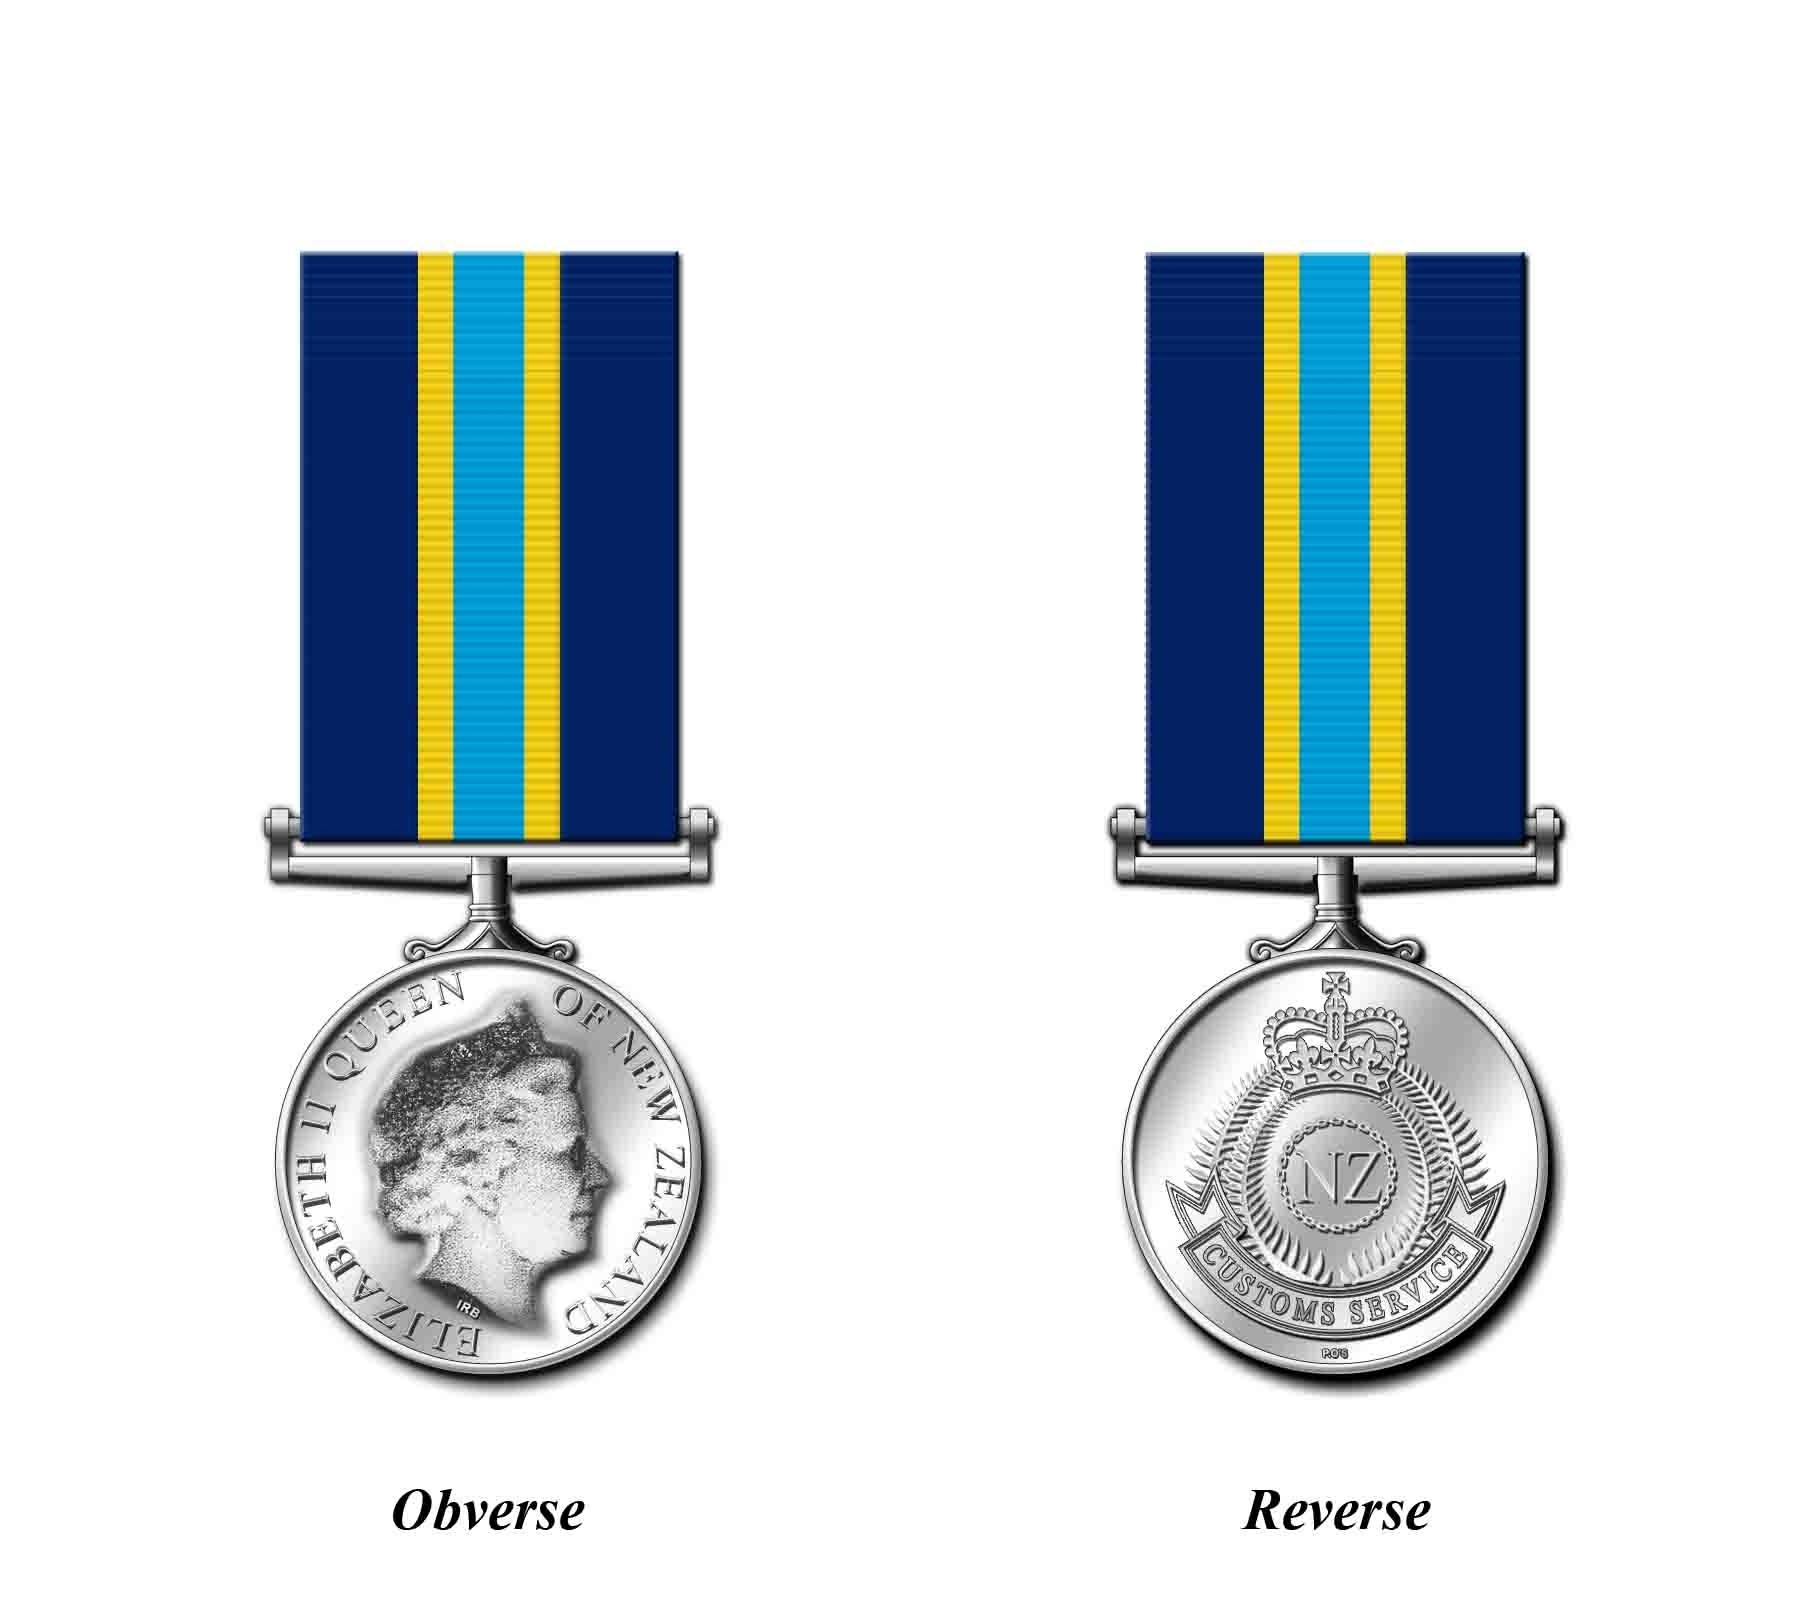 NZ Customs Service Medal